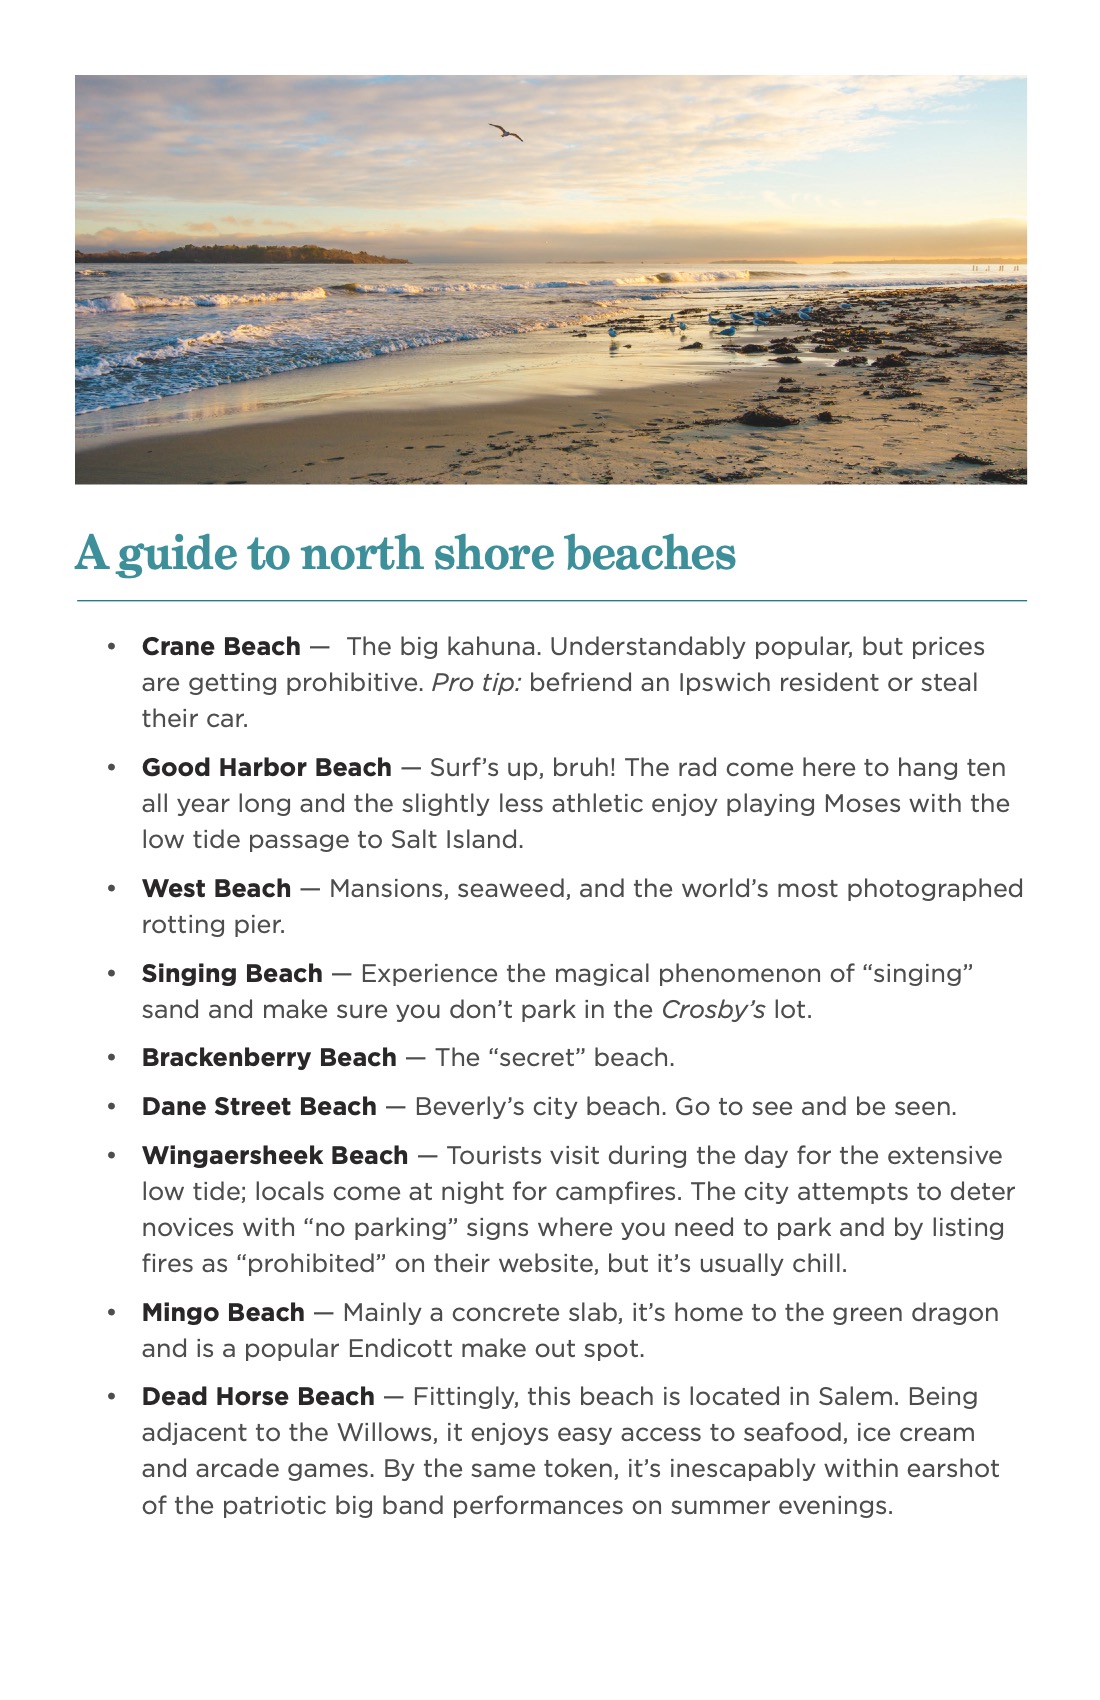 North Shore guidebook Beaches